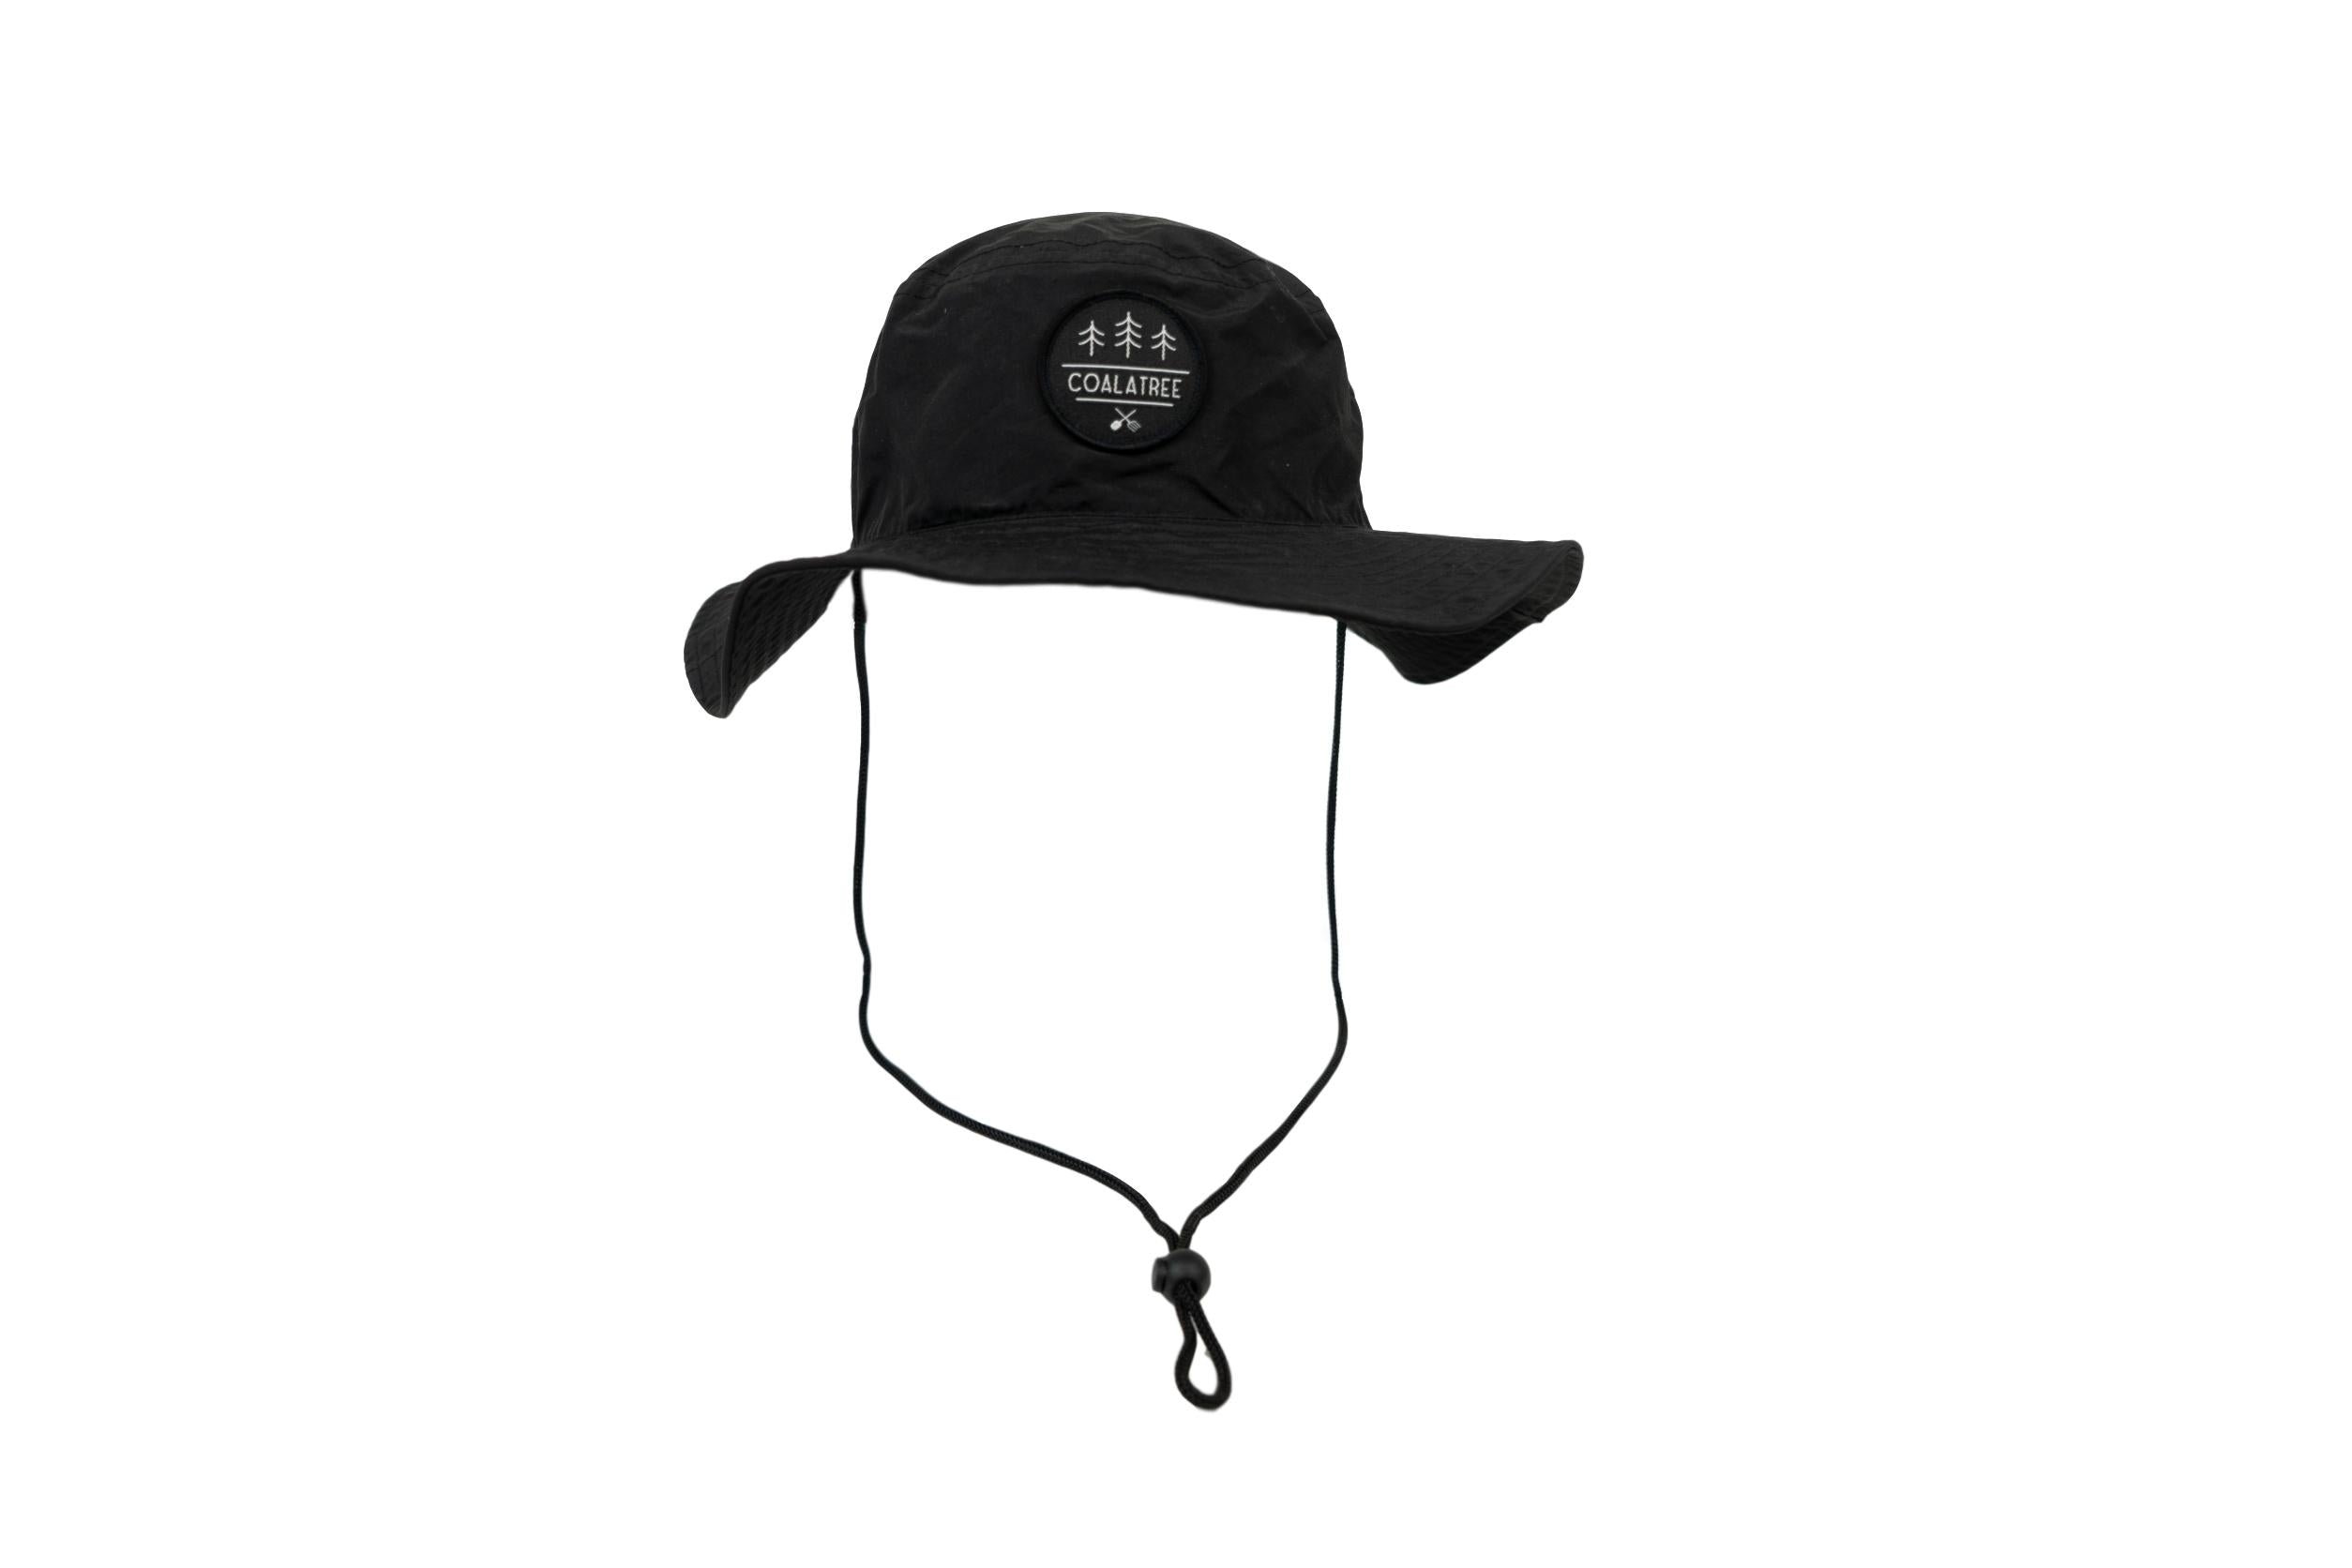 Bucket Hat - Black Store Coalatree 